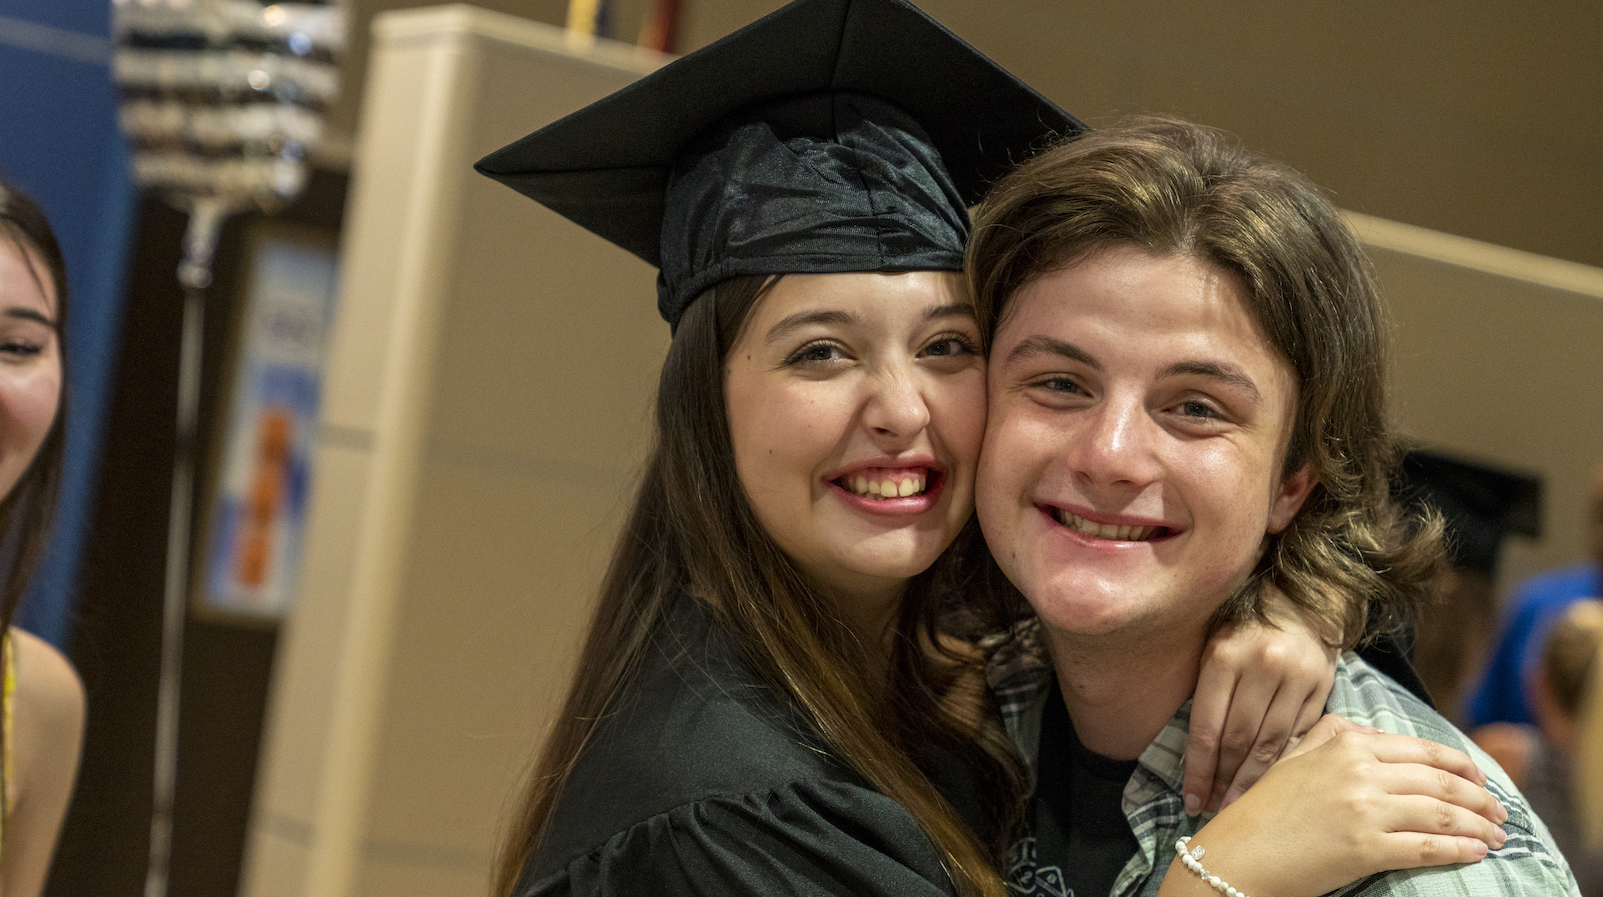 Sarasota Acceleration Academies Graduate Smiles with Friend at Graduation Ceremony